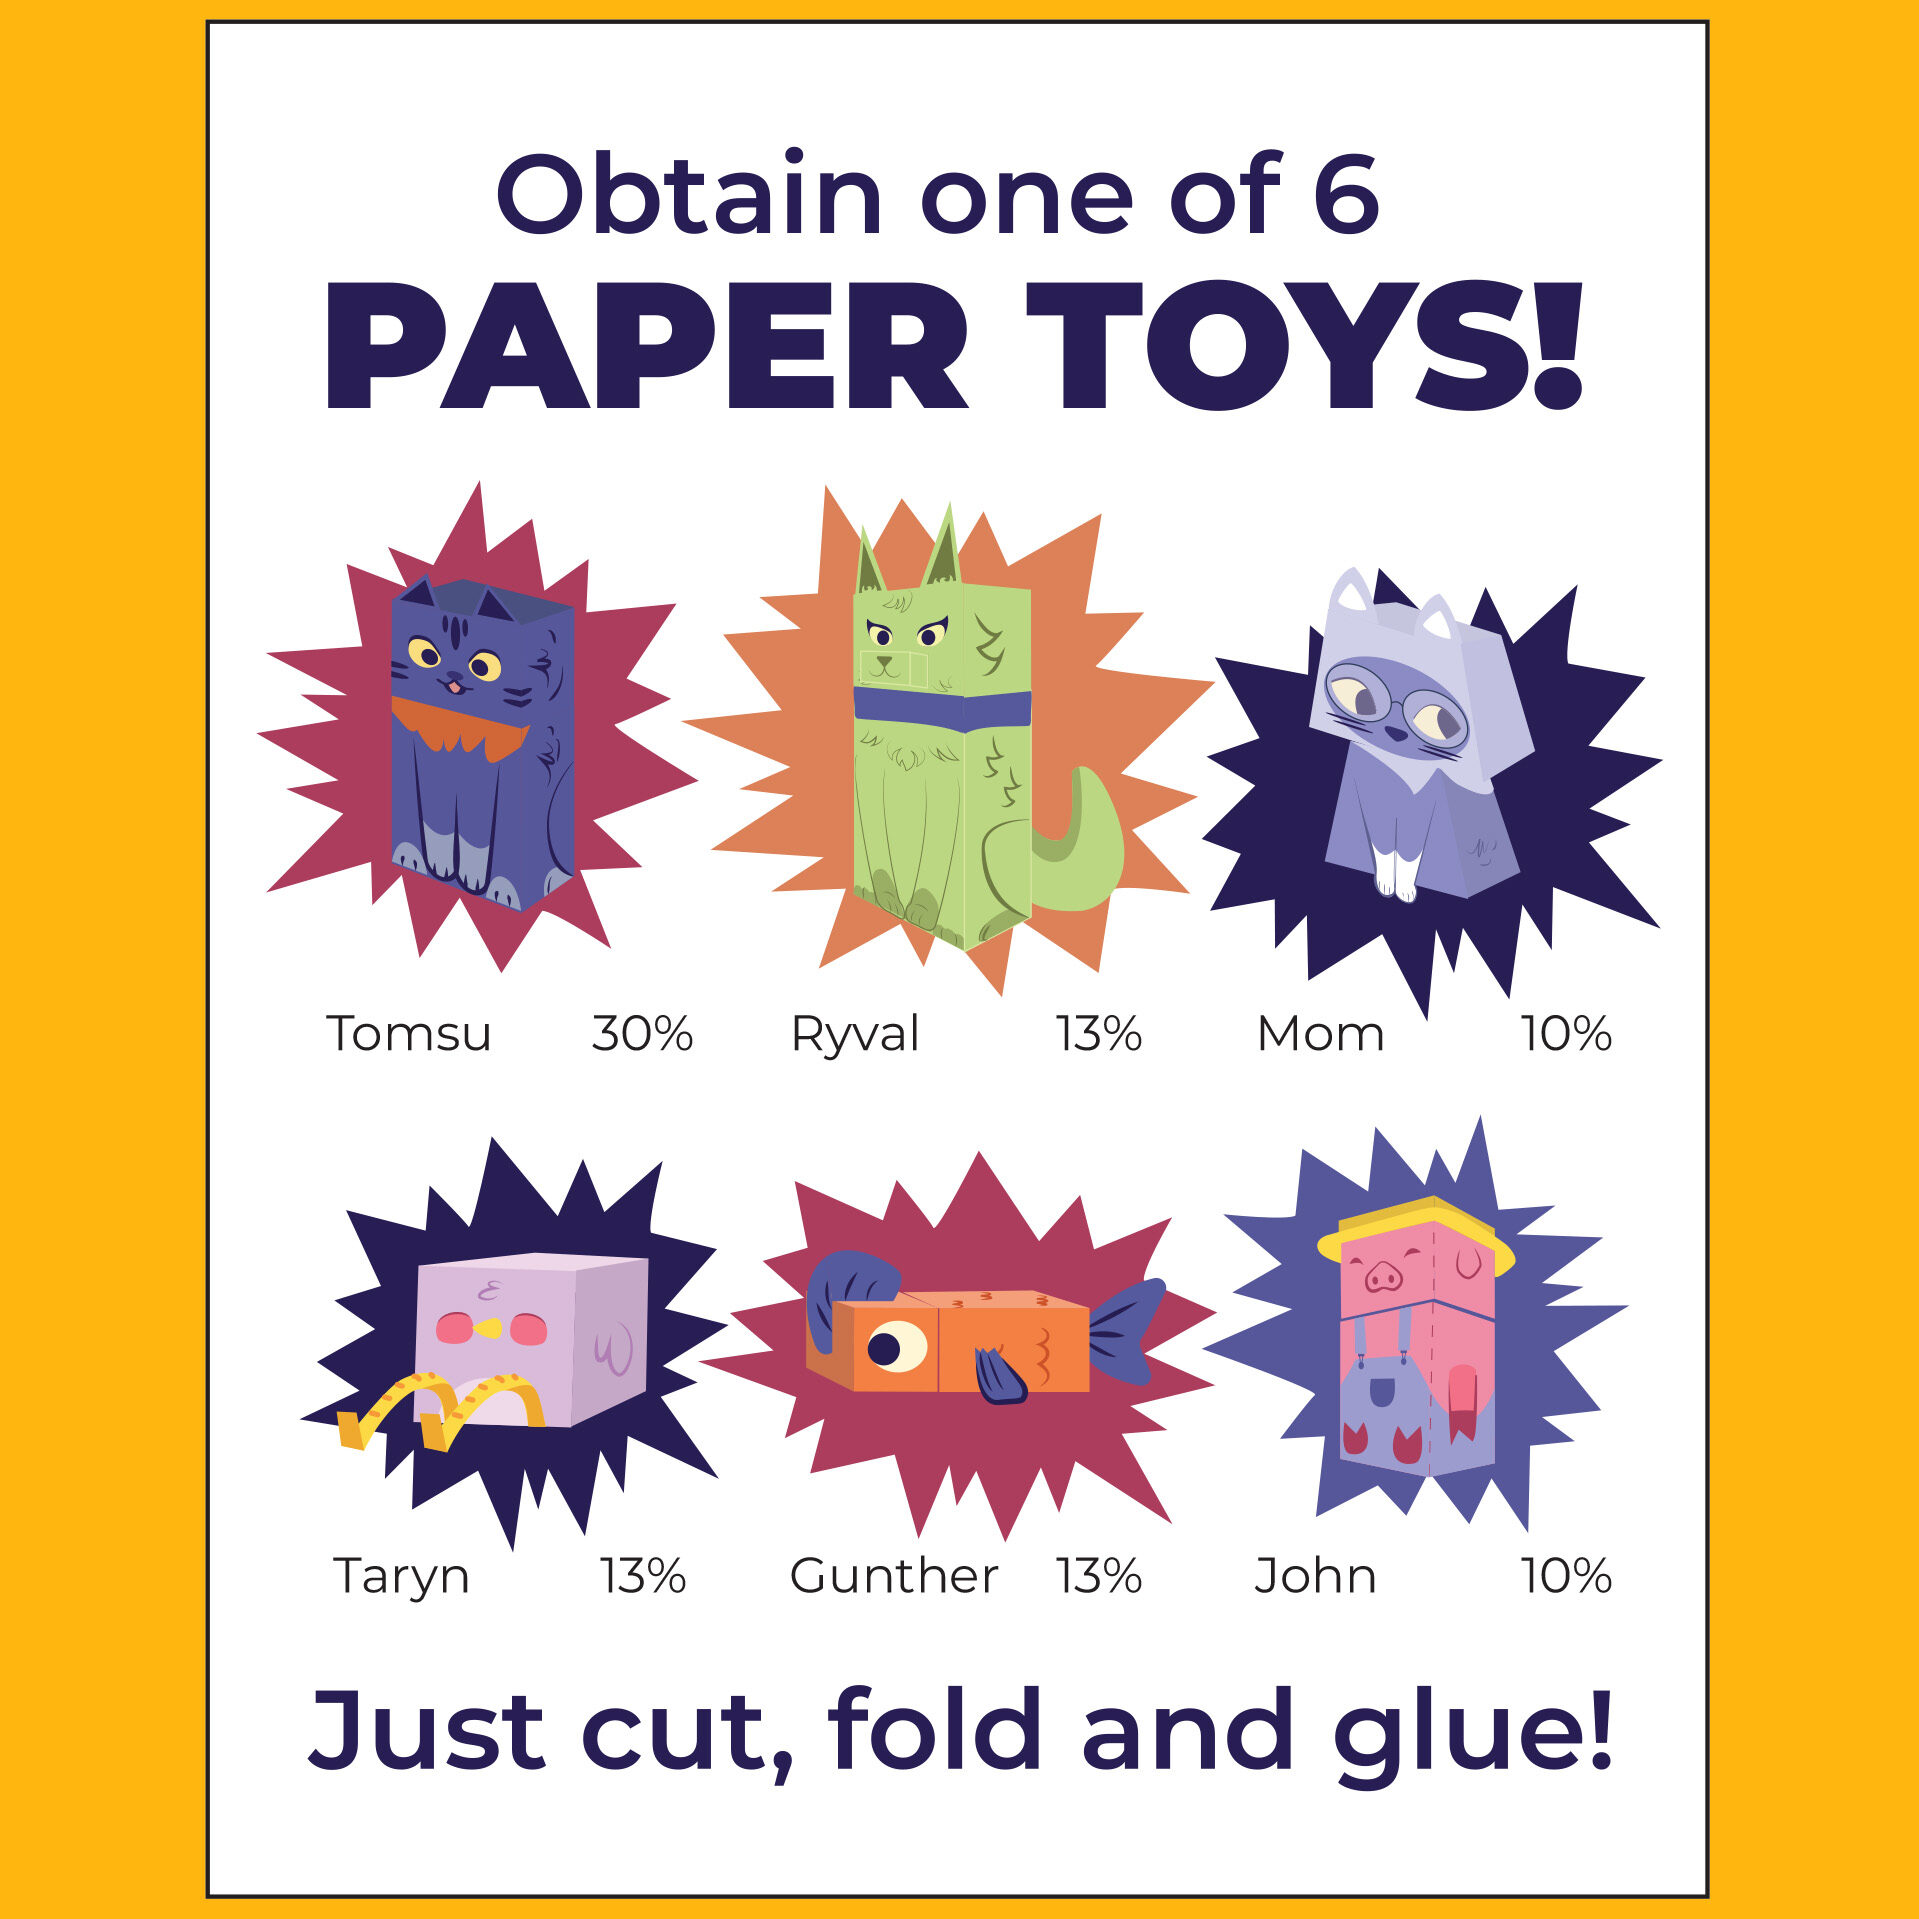 Tomsu Paper toys label